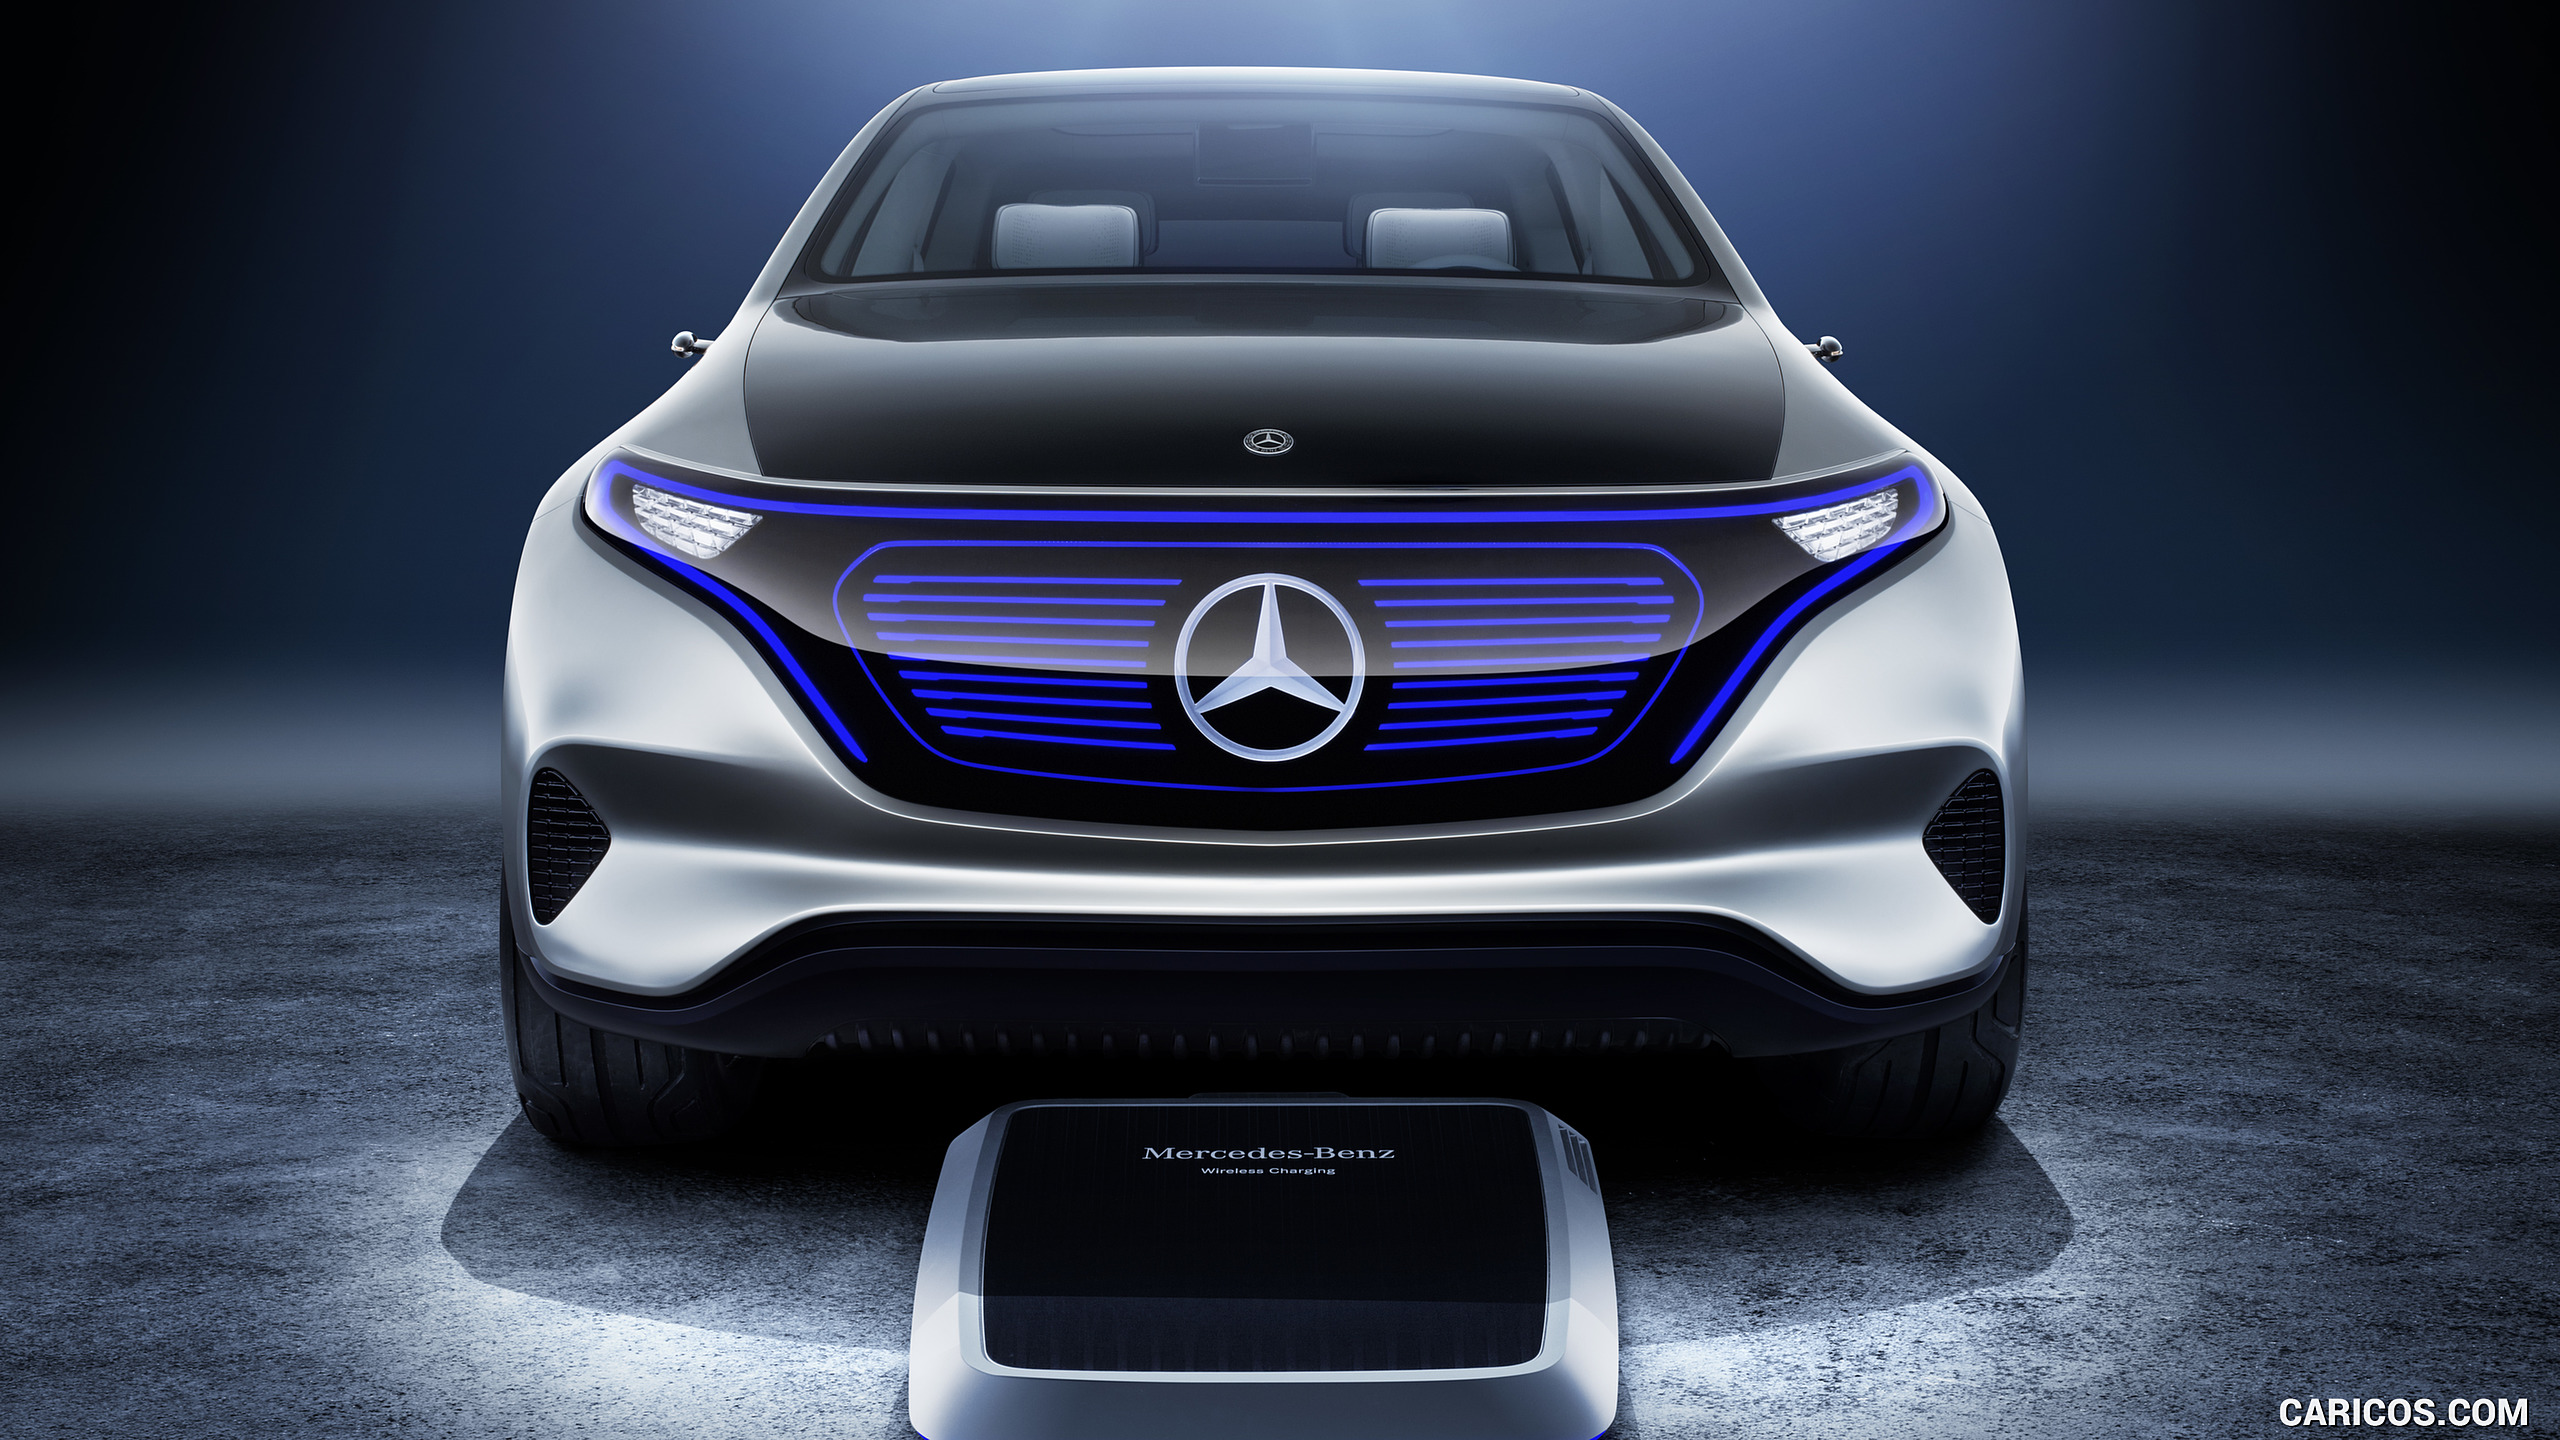 2016 Mercedes-Benz Generation EQ SUV Concept - Inductive Charging Platform - Front, #37 of 50